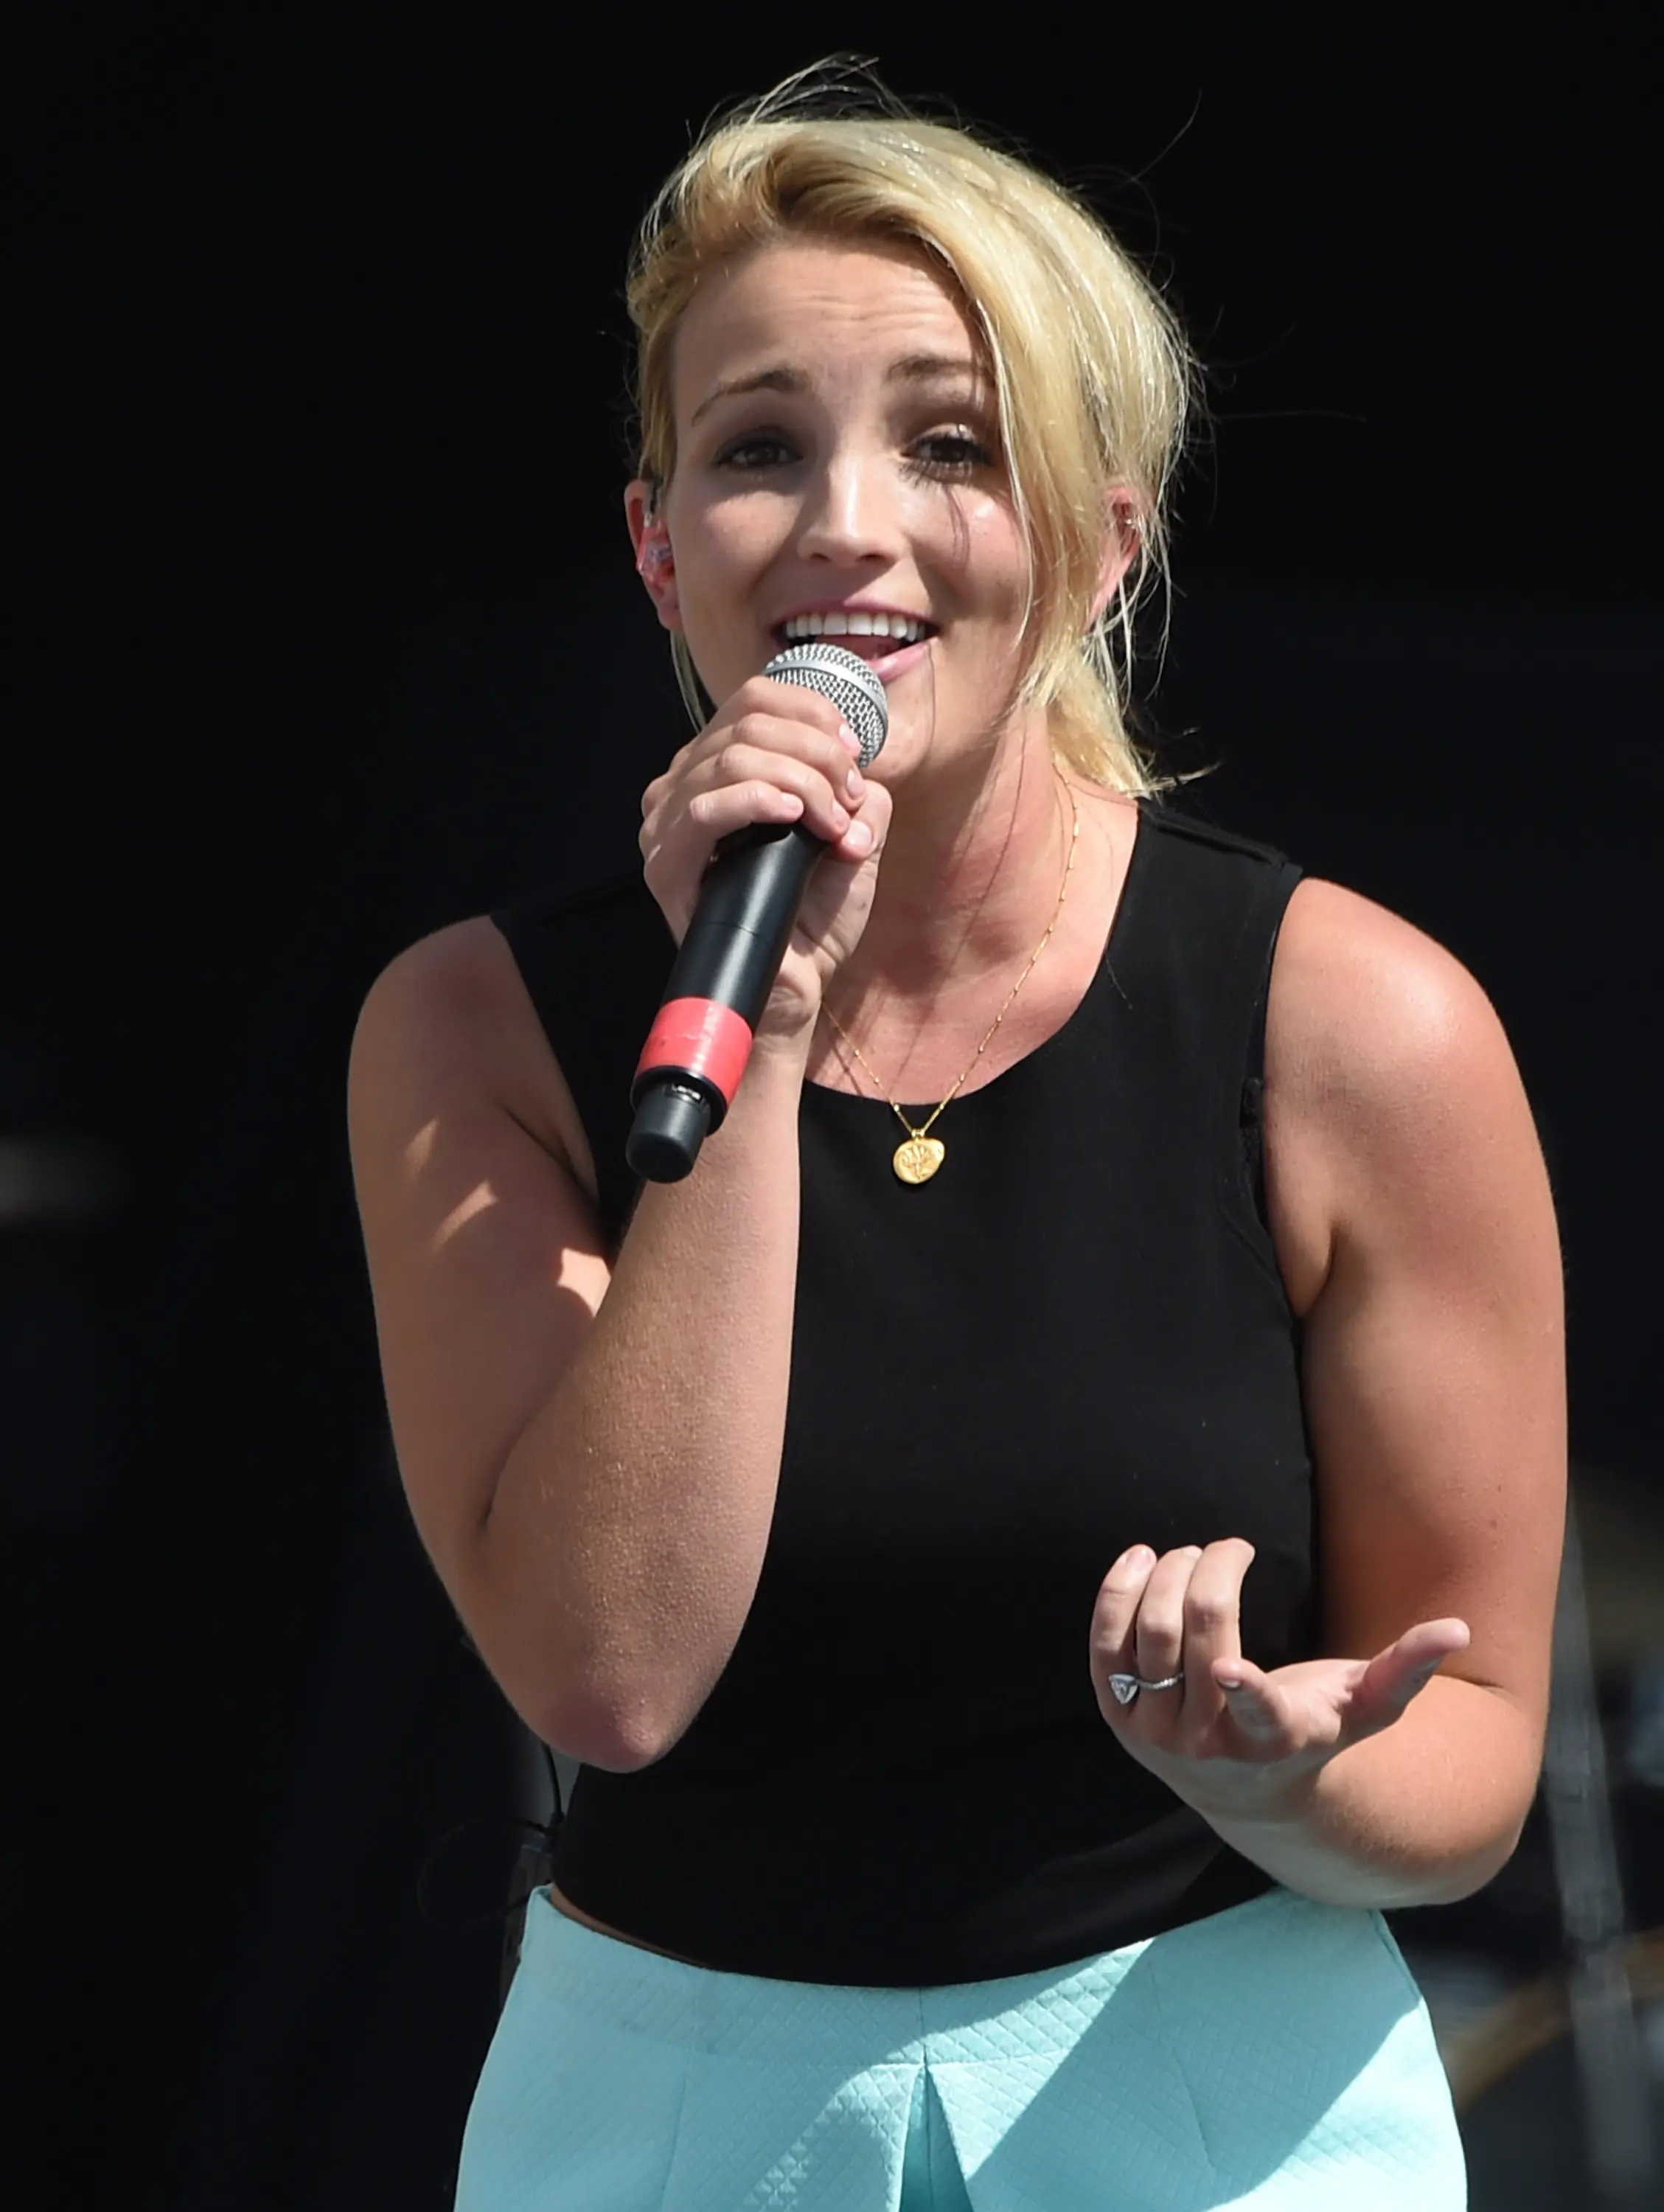 Jamie Lynn Spears, pada usia 16 tahun penyanyi cantik ini mengumumkan jika dirinya tengah mengandung anak pertamanya. Setelah membesarkan anaknya di Mississippi, ia merilis album musik country pada tahun 2013. (AFP/Bintang.com)